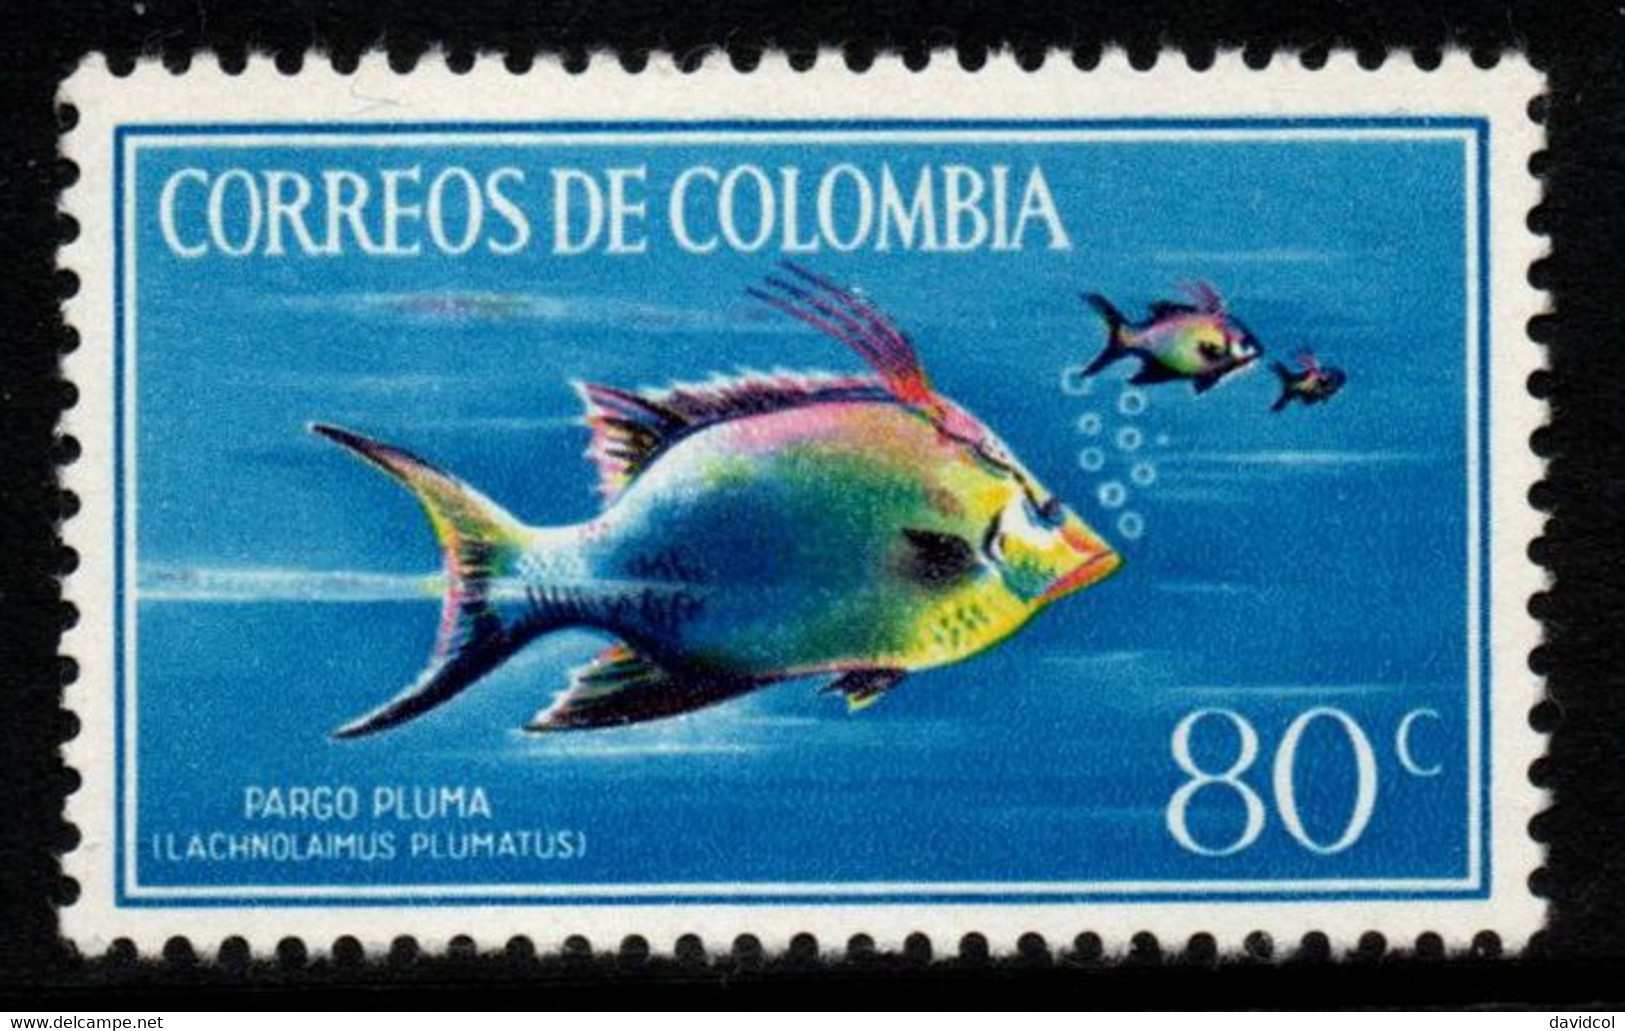 05A- KOLUMBIEN – 1966- MI#:1078 - MNH- PARGO PLUMA (LACHNOLAIMUS PLUMATUS) - FISHES. MARINE LIFE / FAUNA / FISH - Colombia